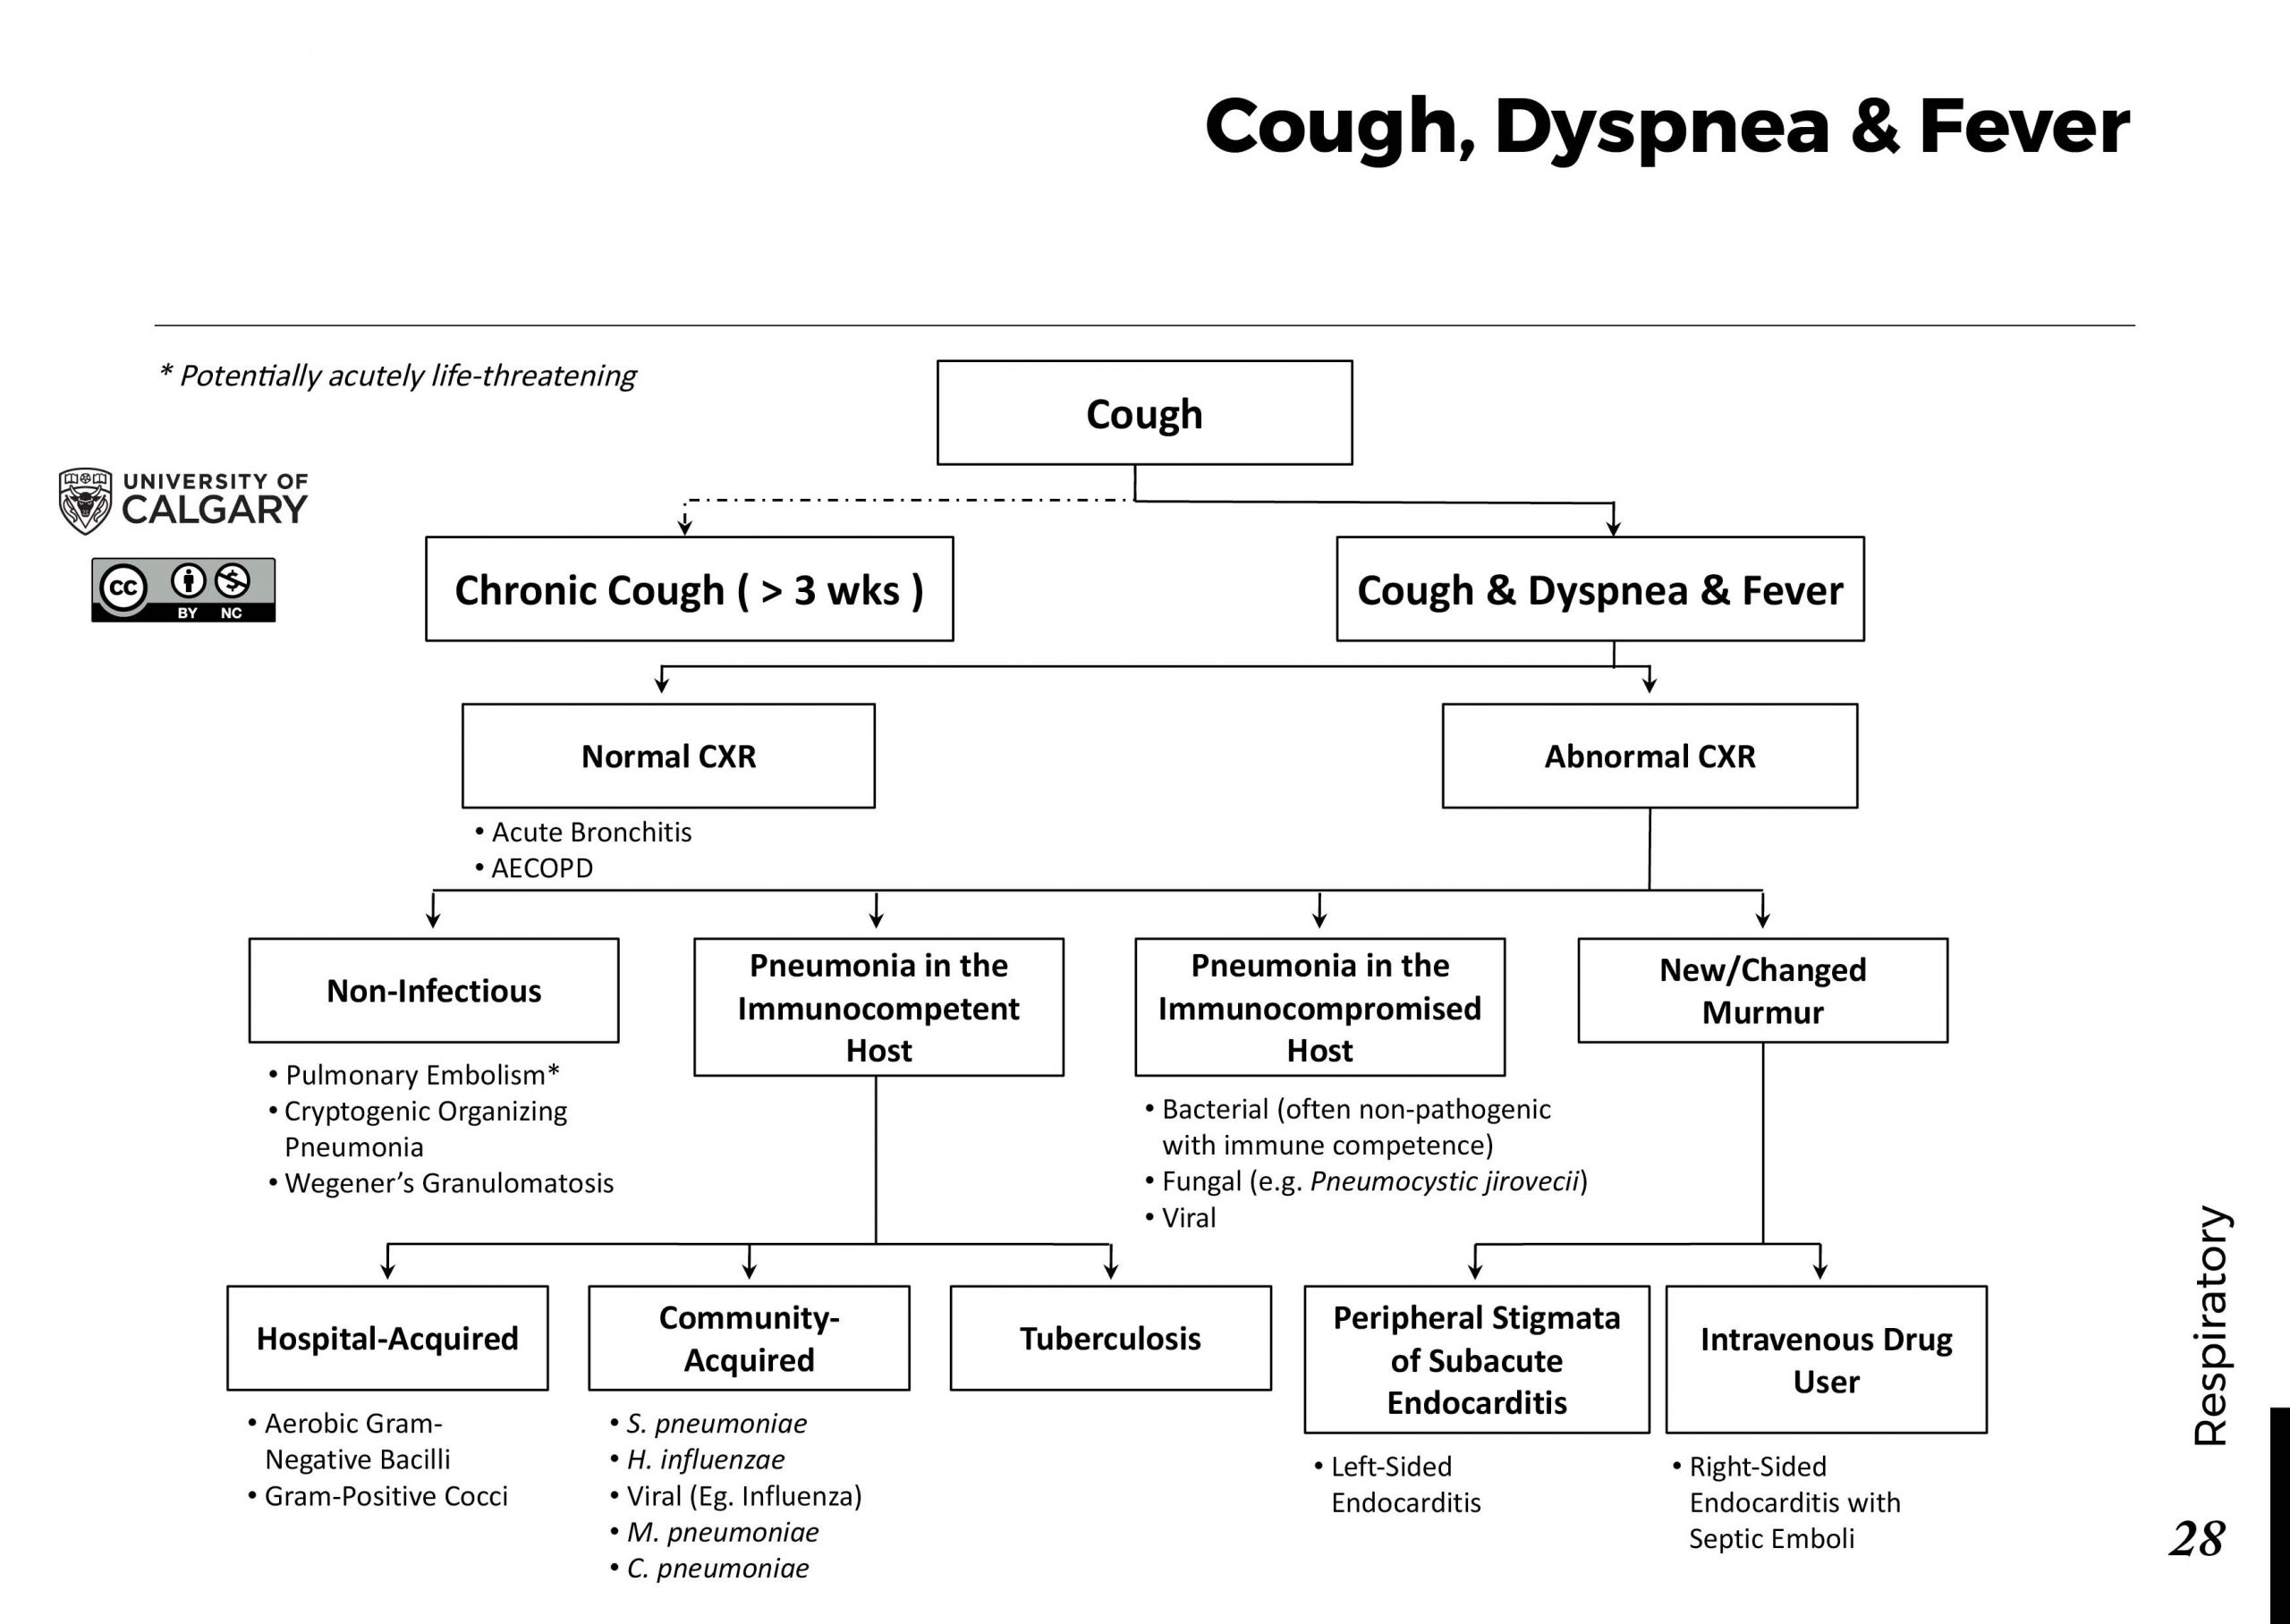 COUGH: Dyspnea & Fever Scheme